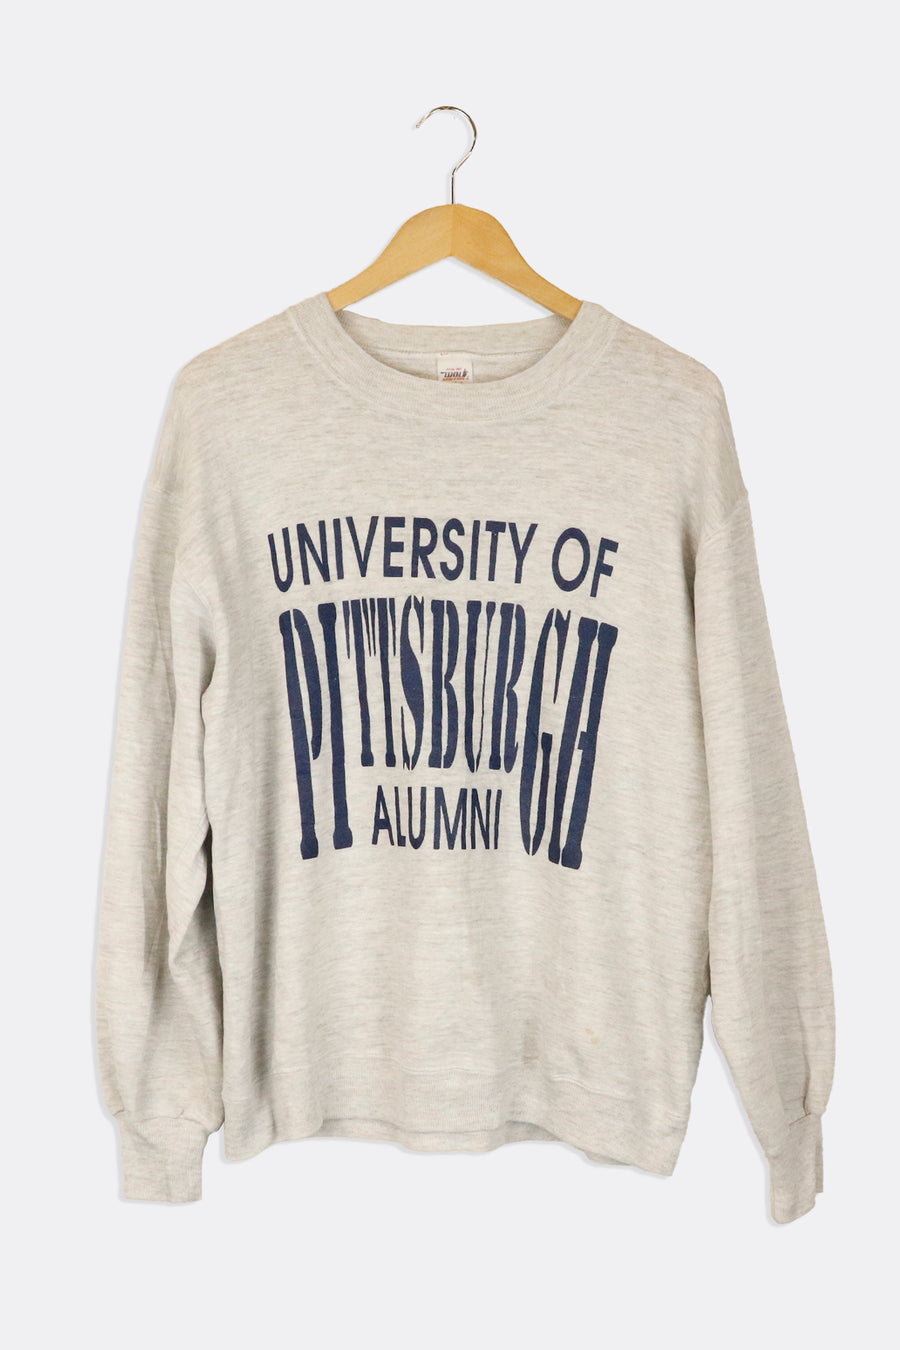 Vintage Varsity University Of Pittsburgh Alumni Vinyl Sweatshirt Sz L